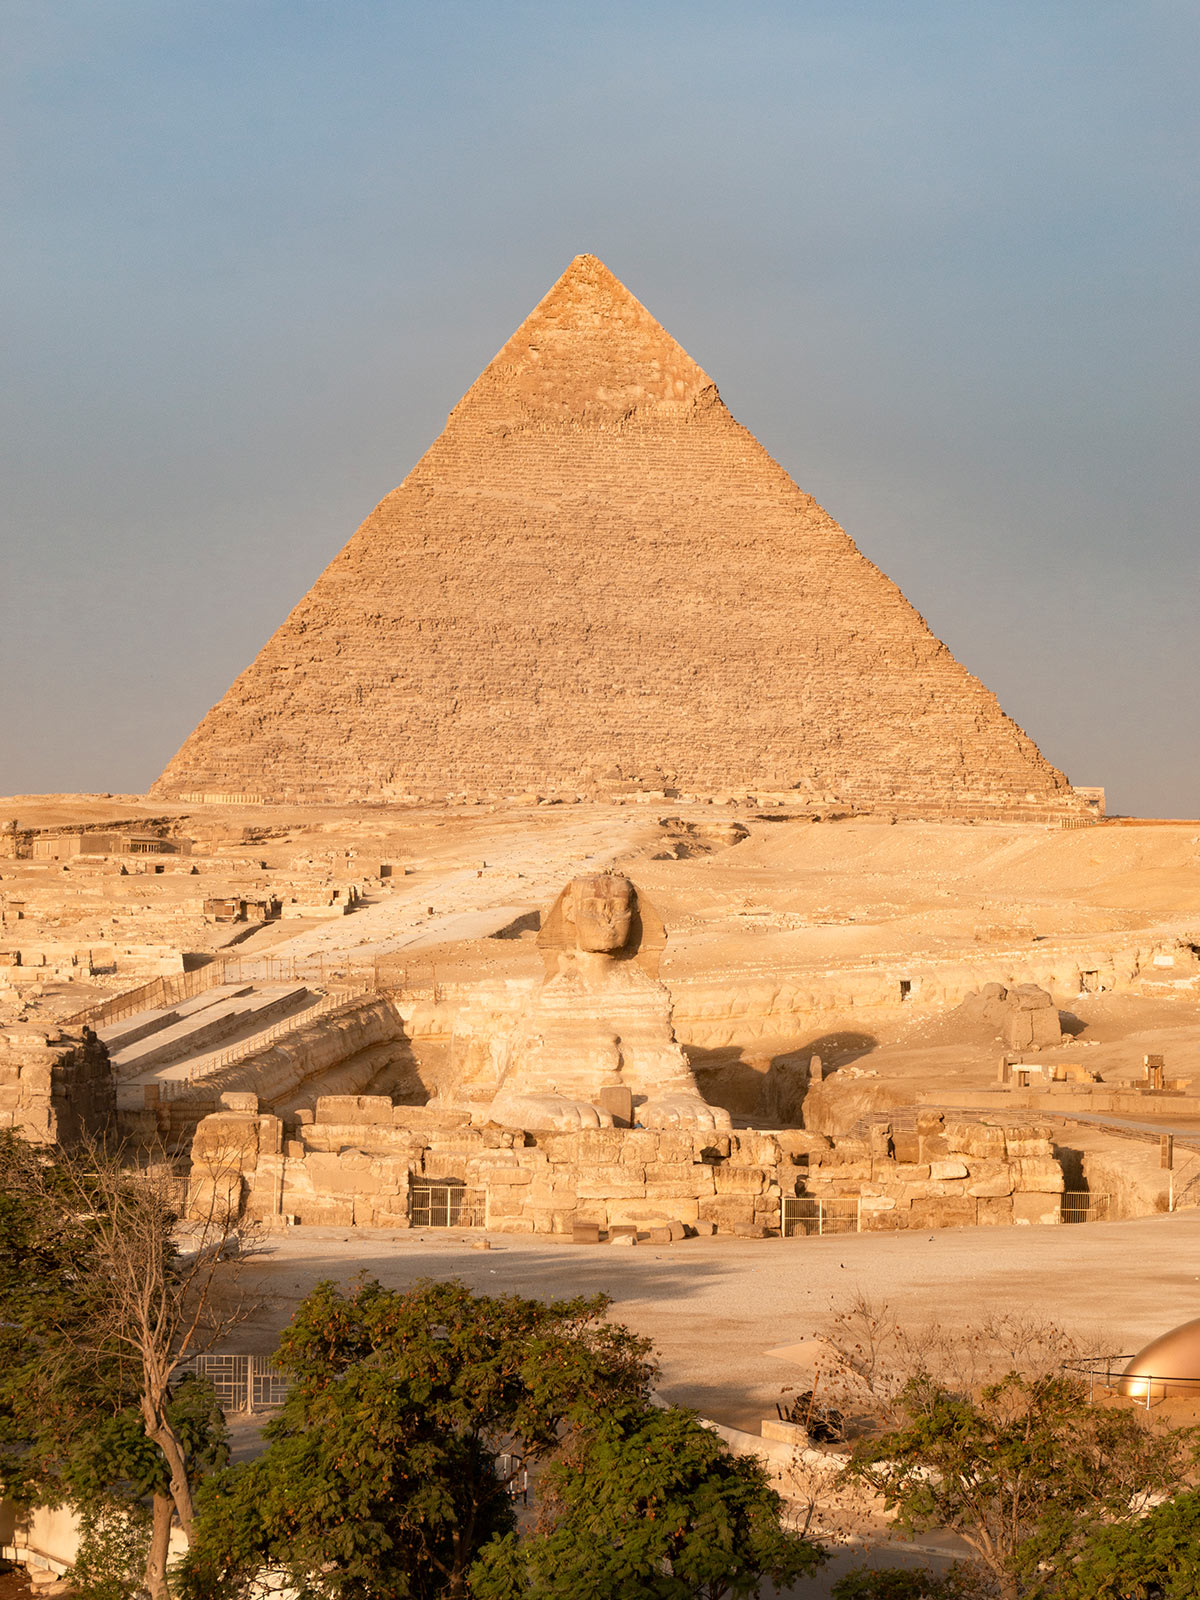 Sphinx depuis l'hôtel Pyramids View Inn, Gizeh, Égypte / Pyramids View Inn Hotel, Giza, Egypt